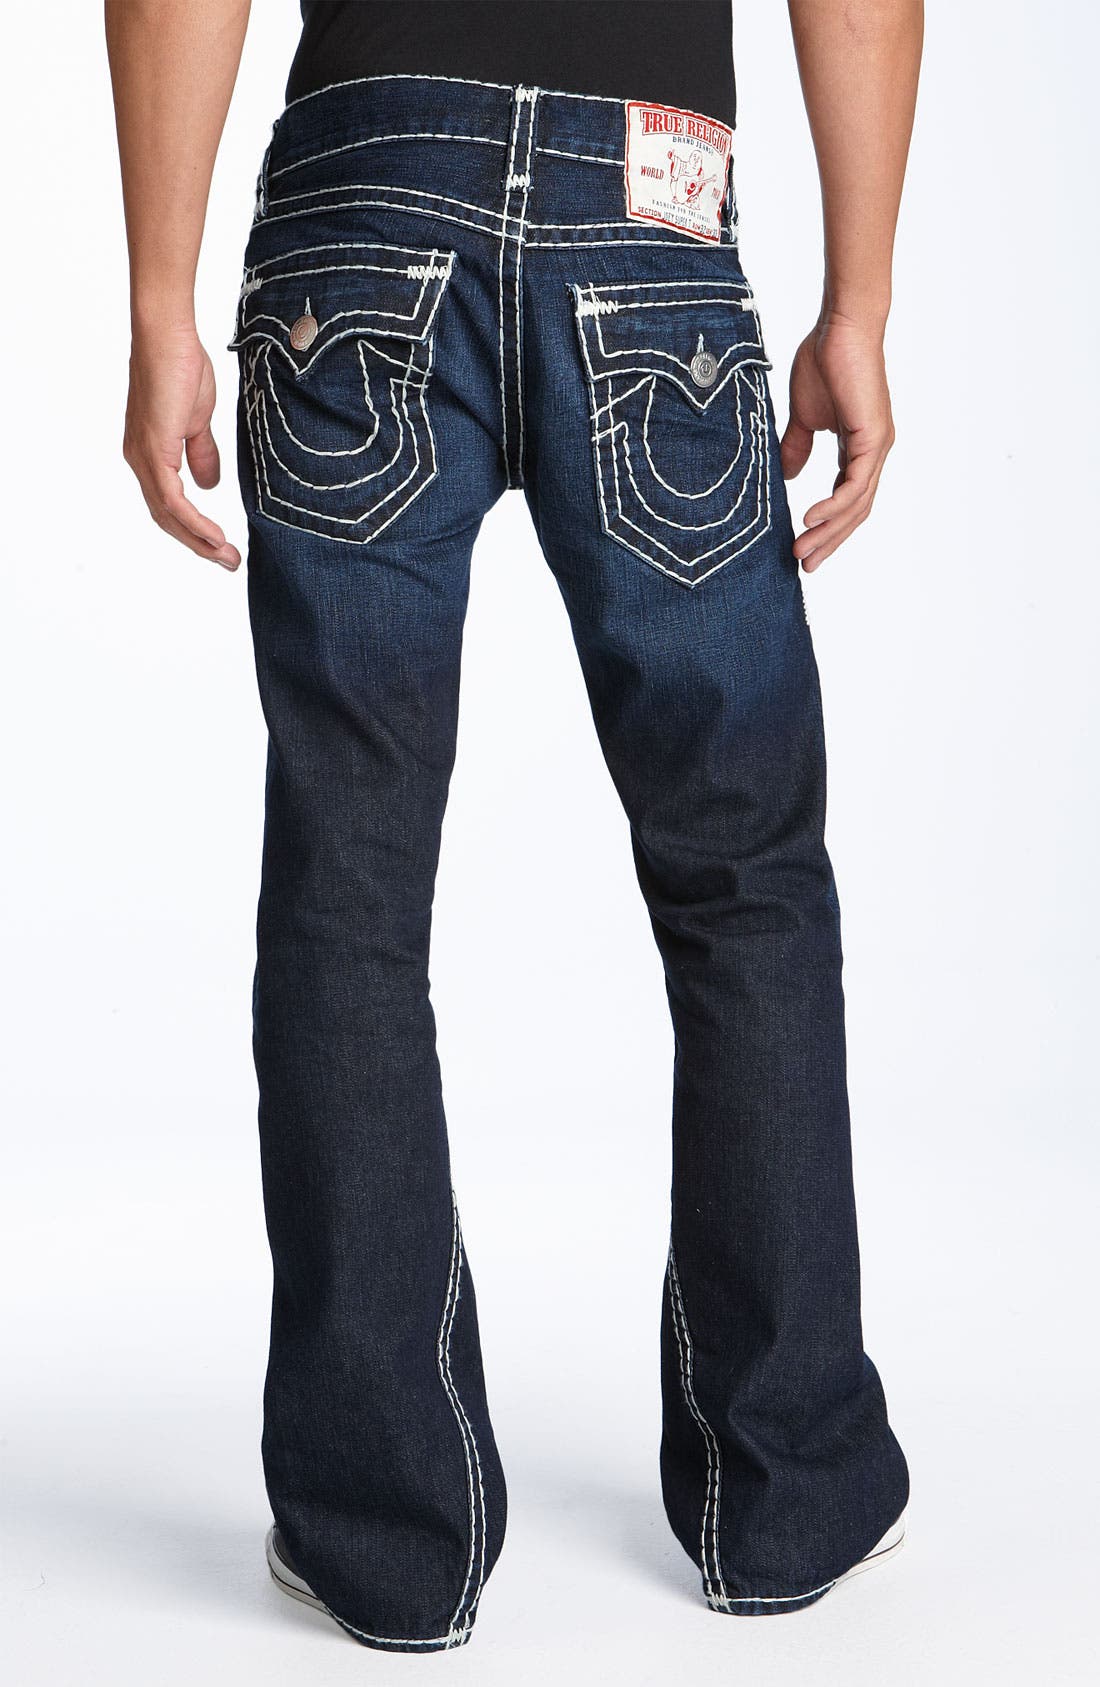 true religion jeans canada 